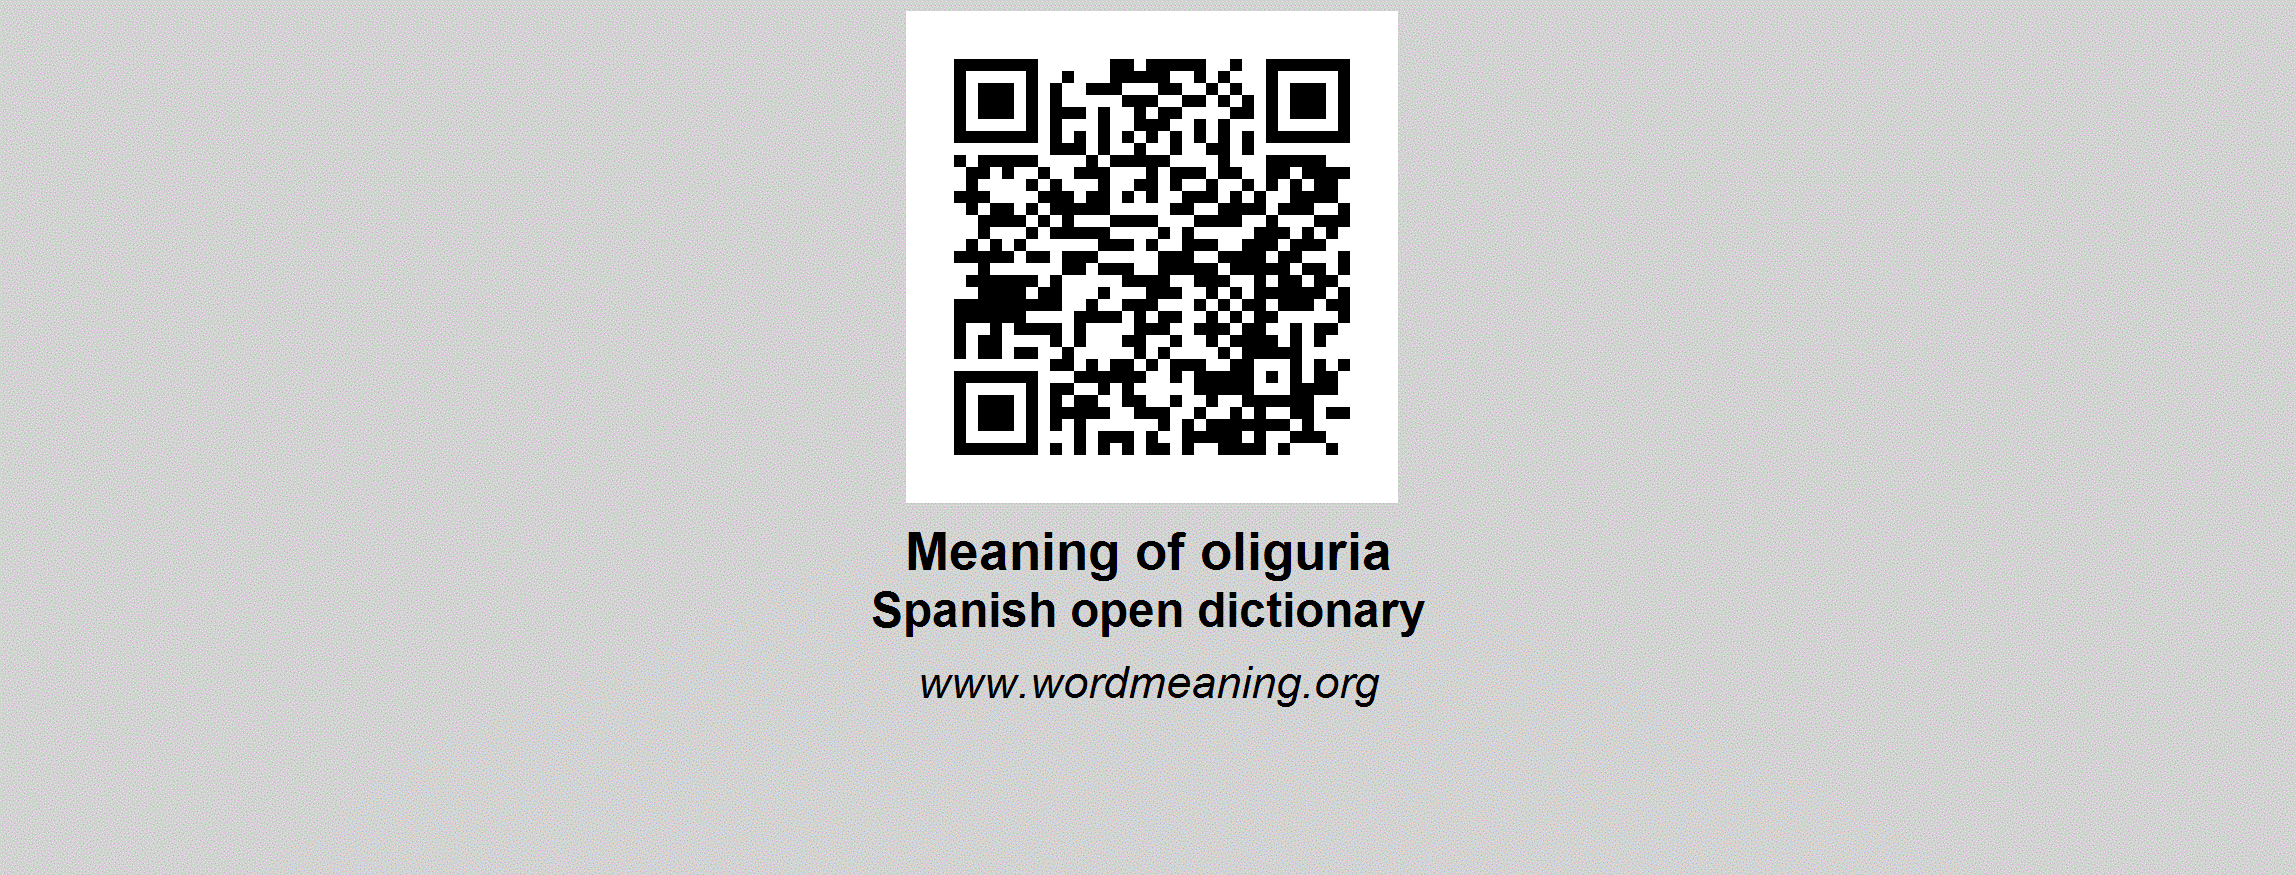 Oliguria meaning